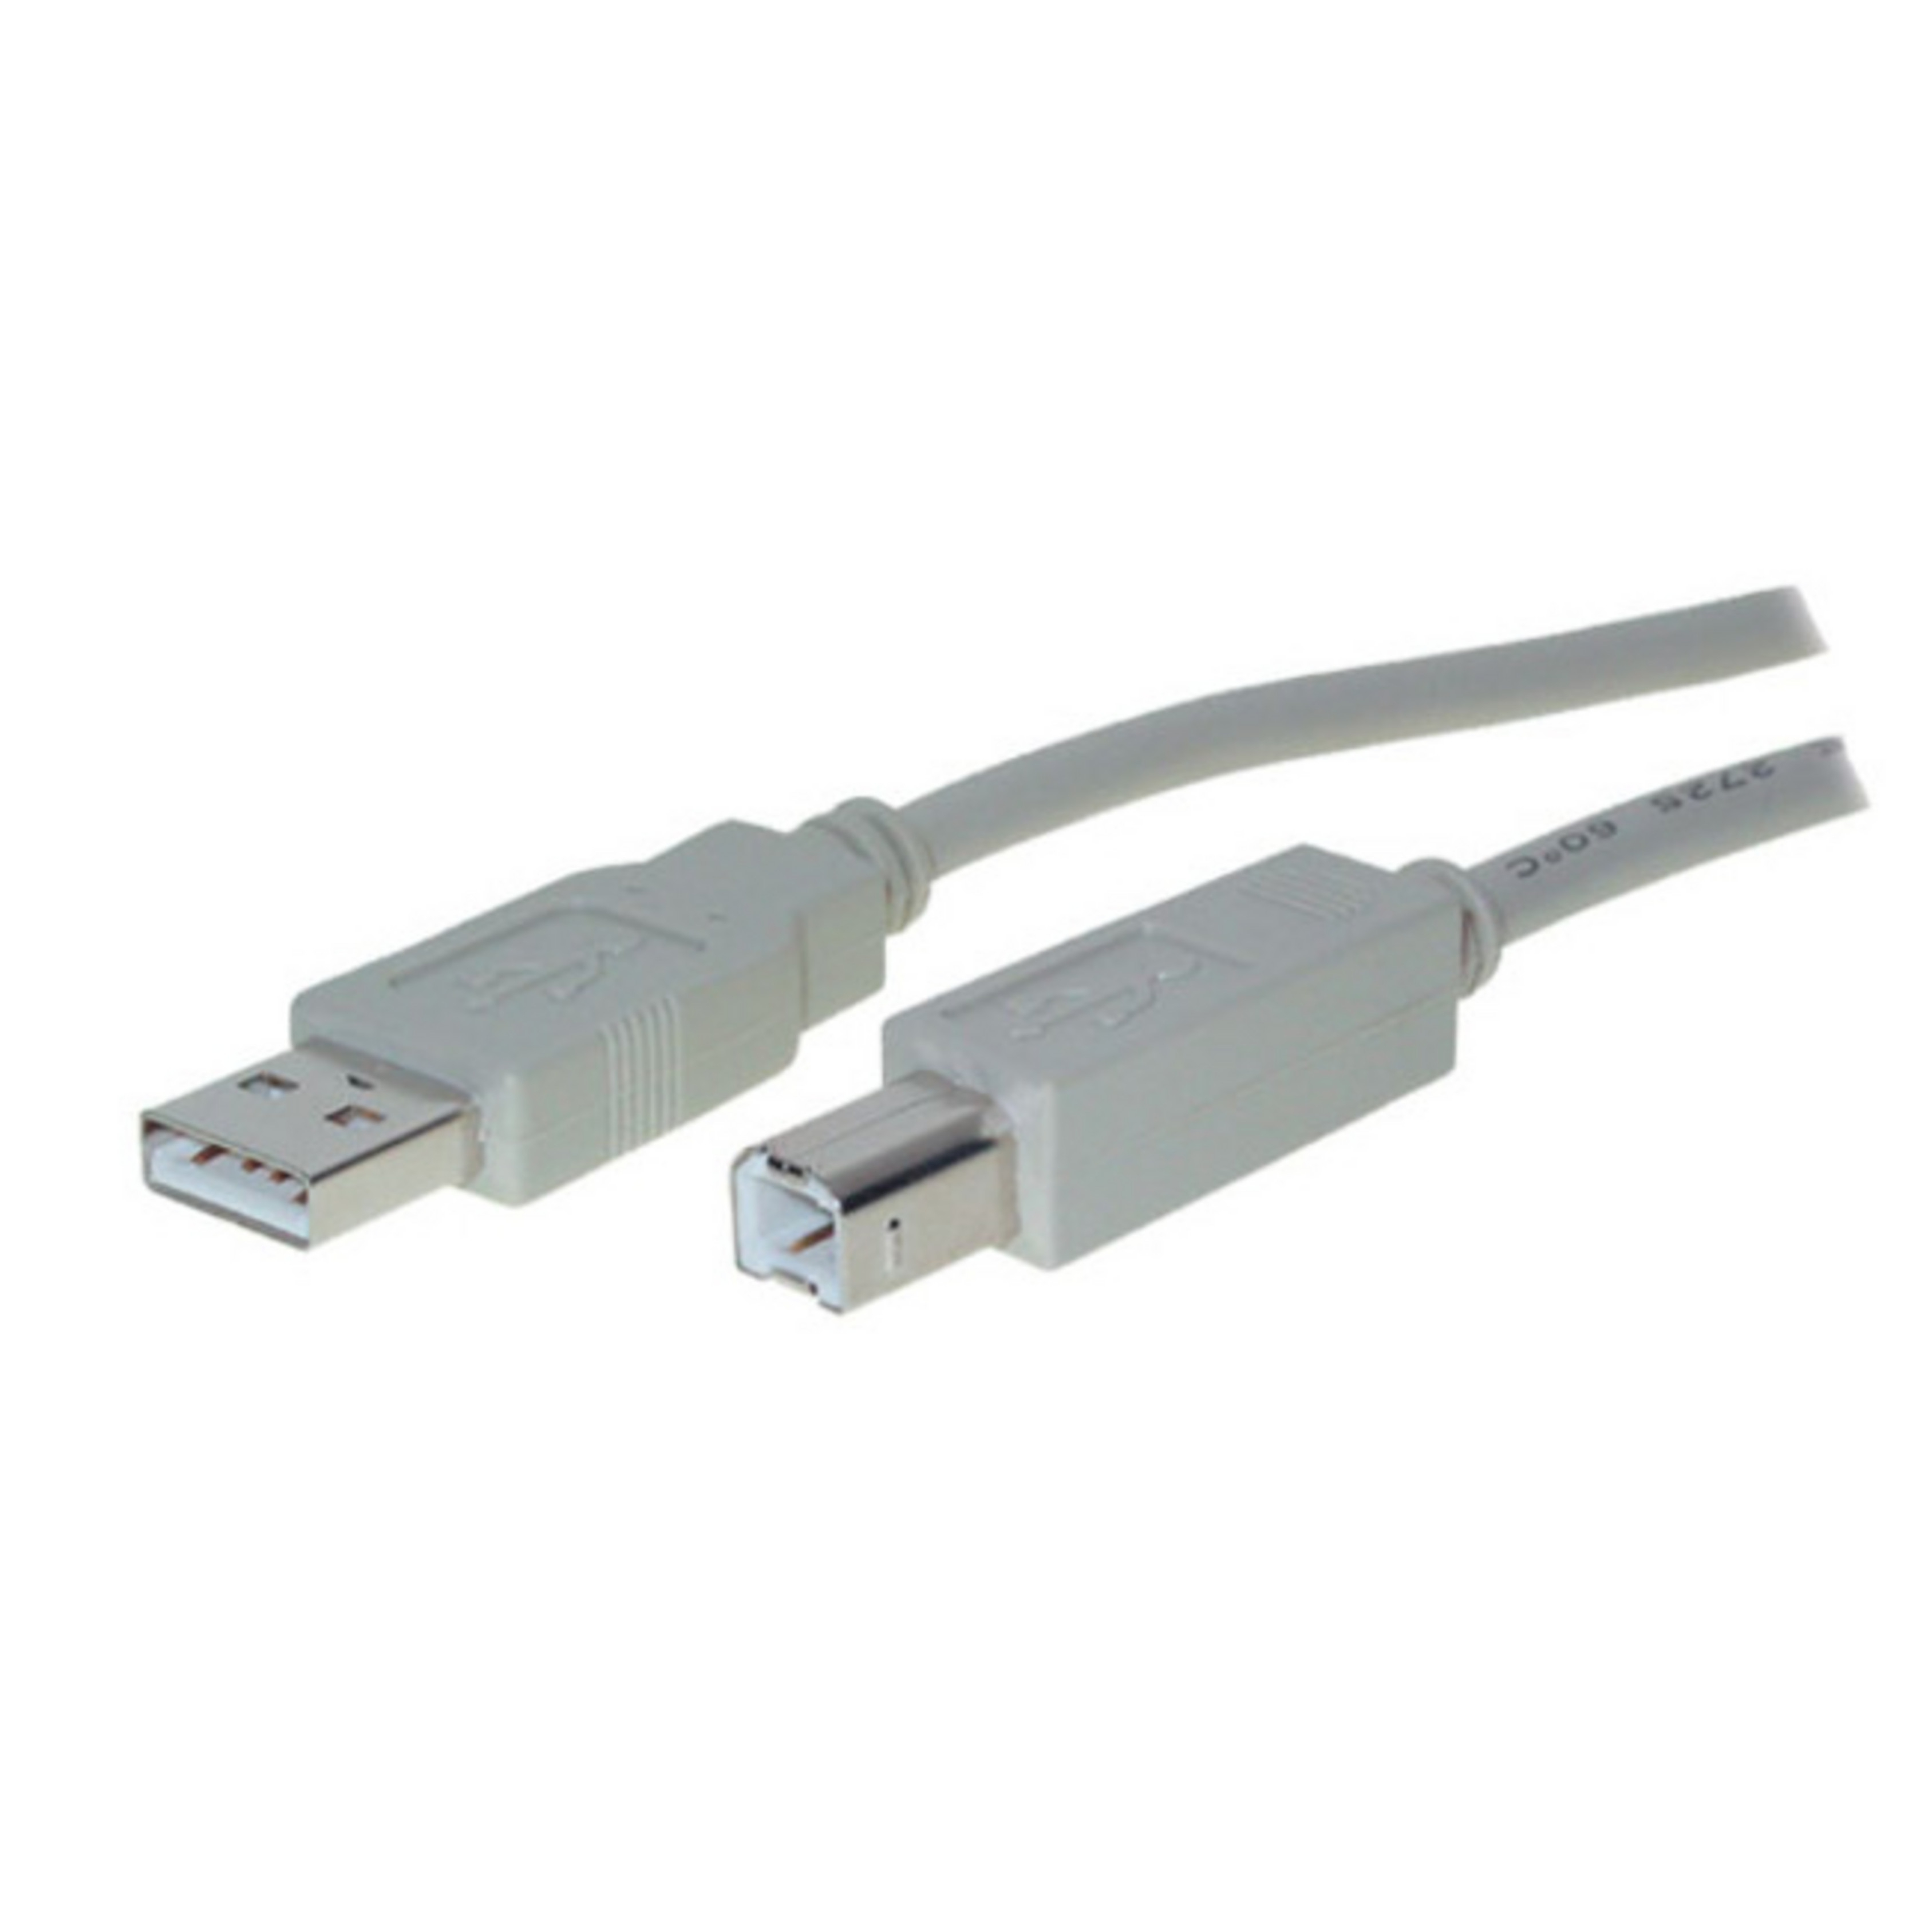 USB 0,5m S/CONN Kabel B A Stecker 2.0 MAXIMUM USB Kabel / Stecker CONNECTIVITY USB